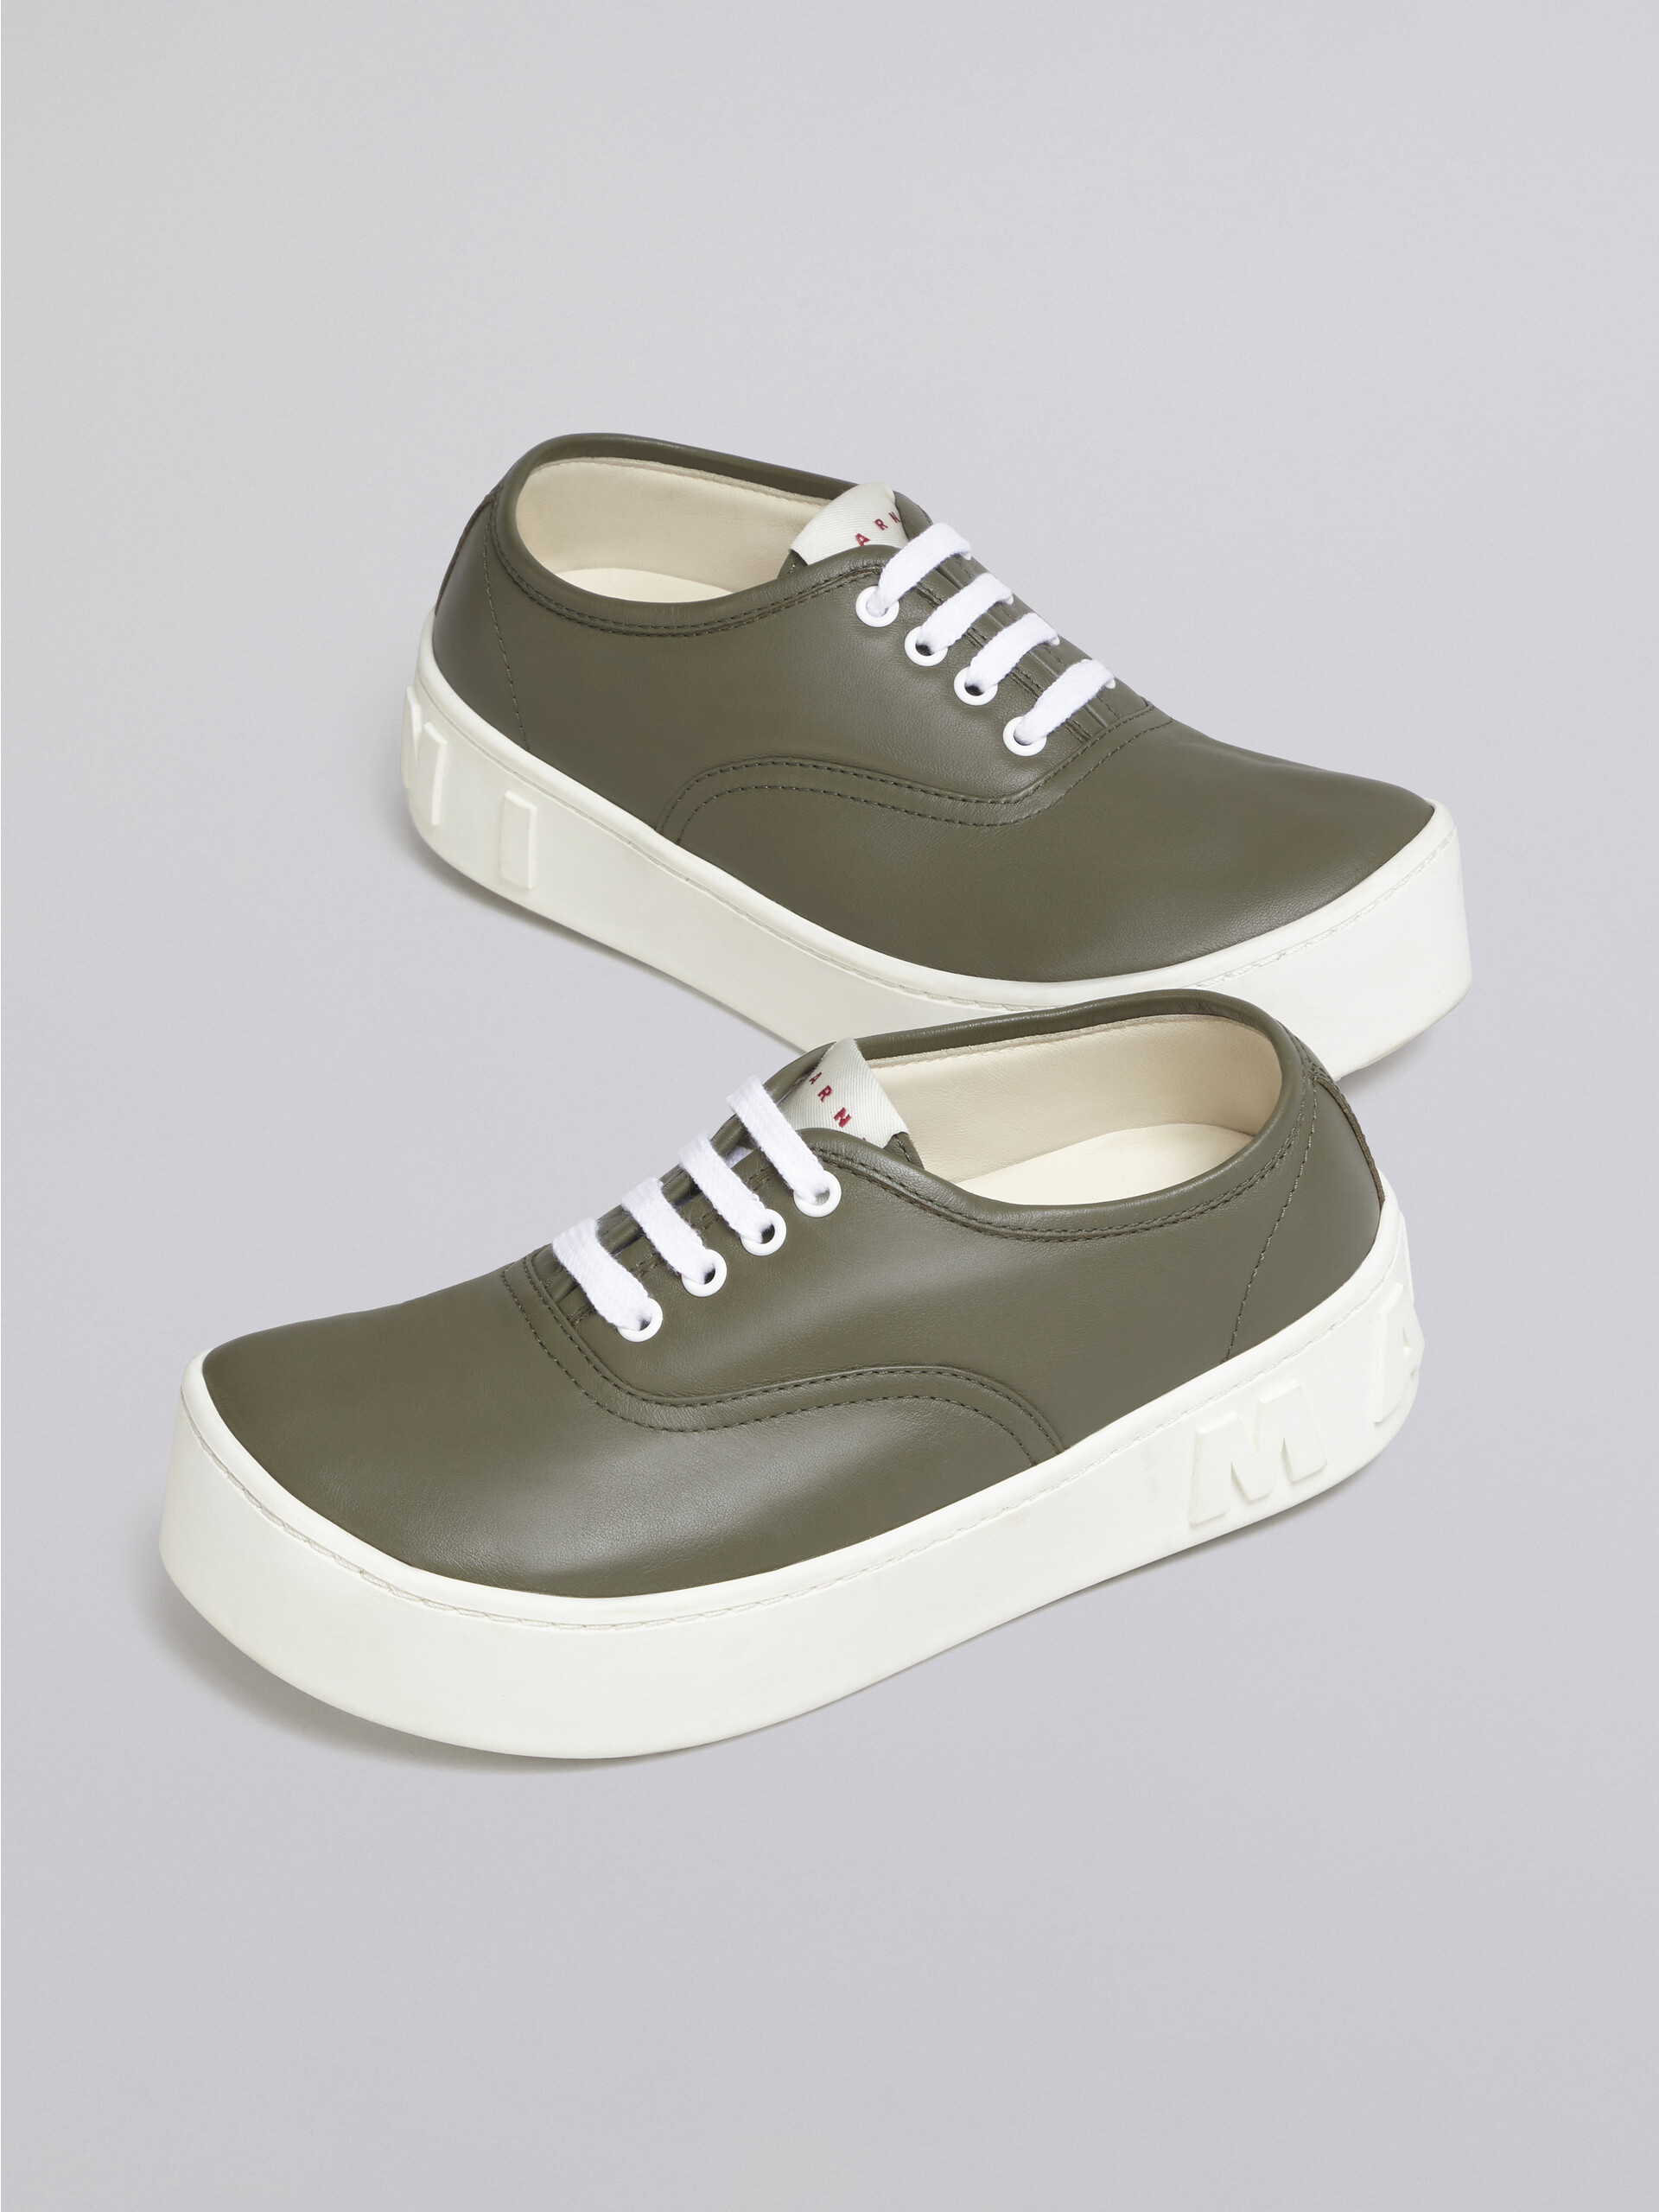 Sneakers en cuir de veau lisse vert avec grand logo Marni en relief - Sneakers - Image 5